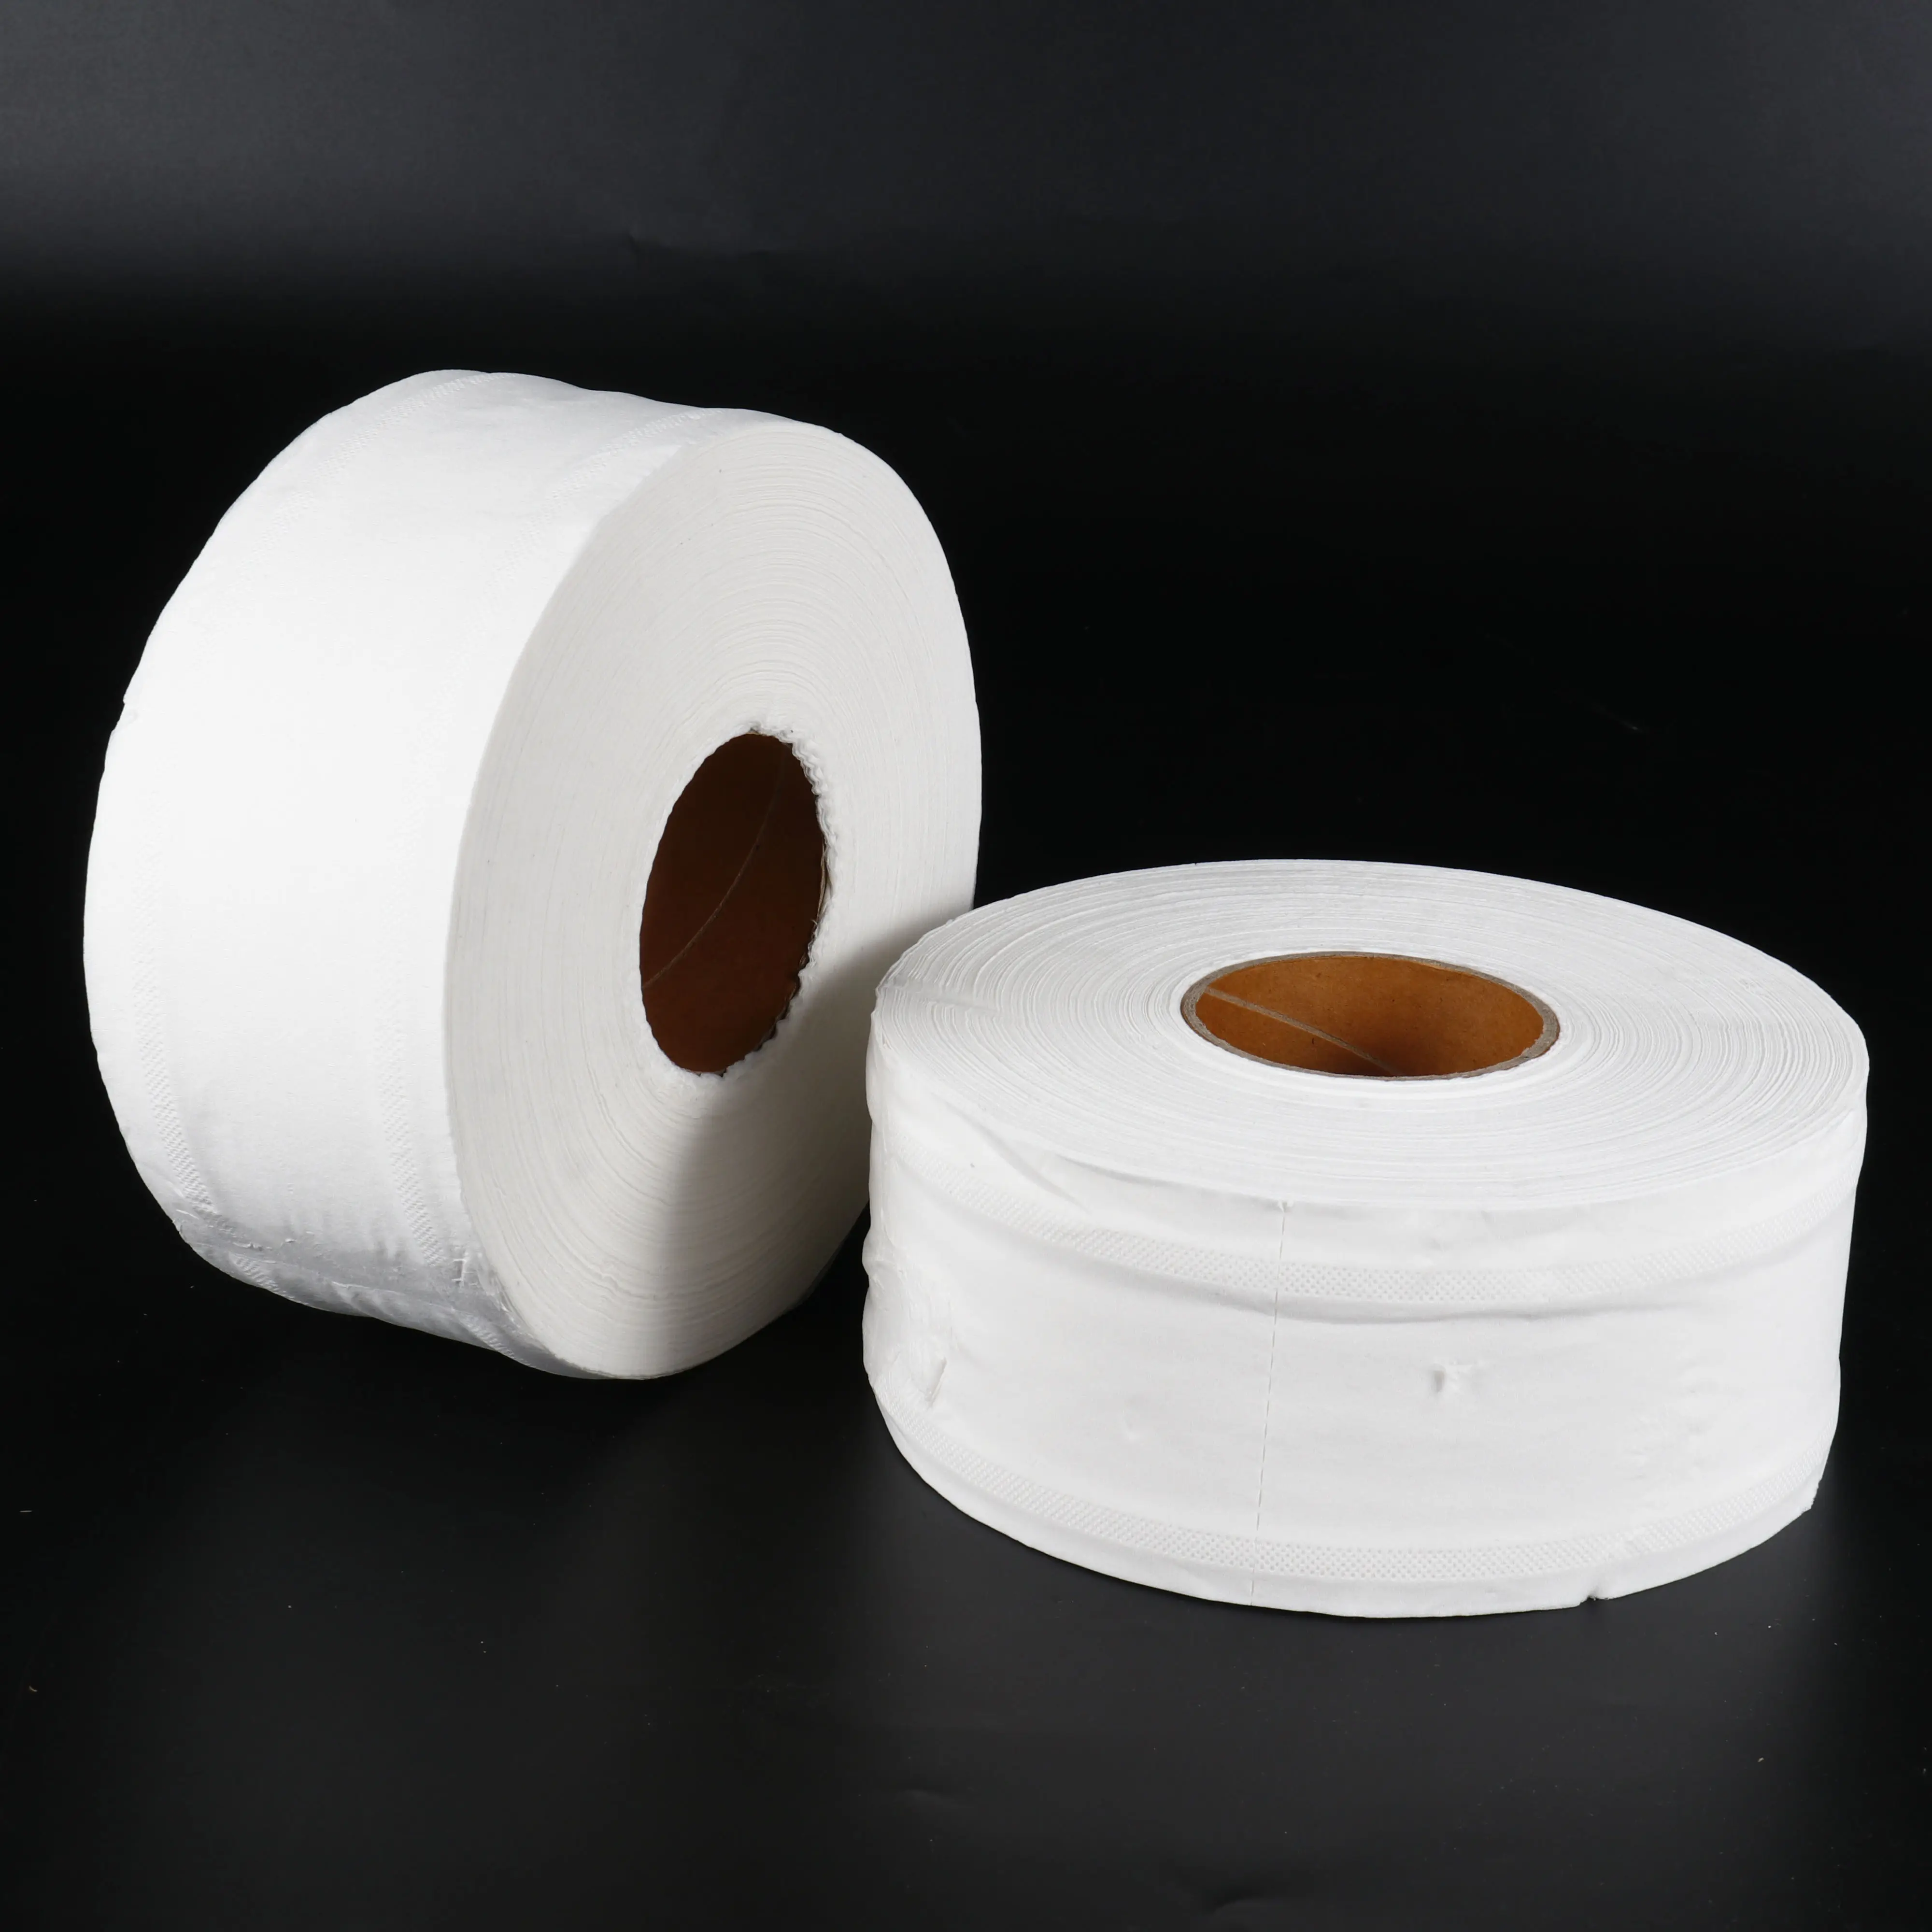 QINGSHE Factory-rollos de papel higiénico para baño, mezcla de pulpa de madera, toalla de papel tisú para Hotel, rollos Jumbo Ultra suaves de 3 capas, 450g